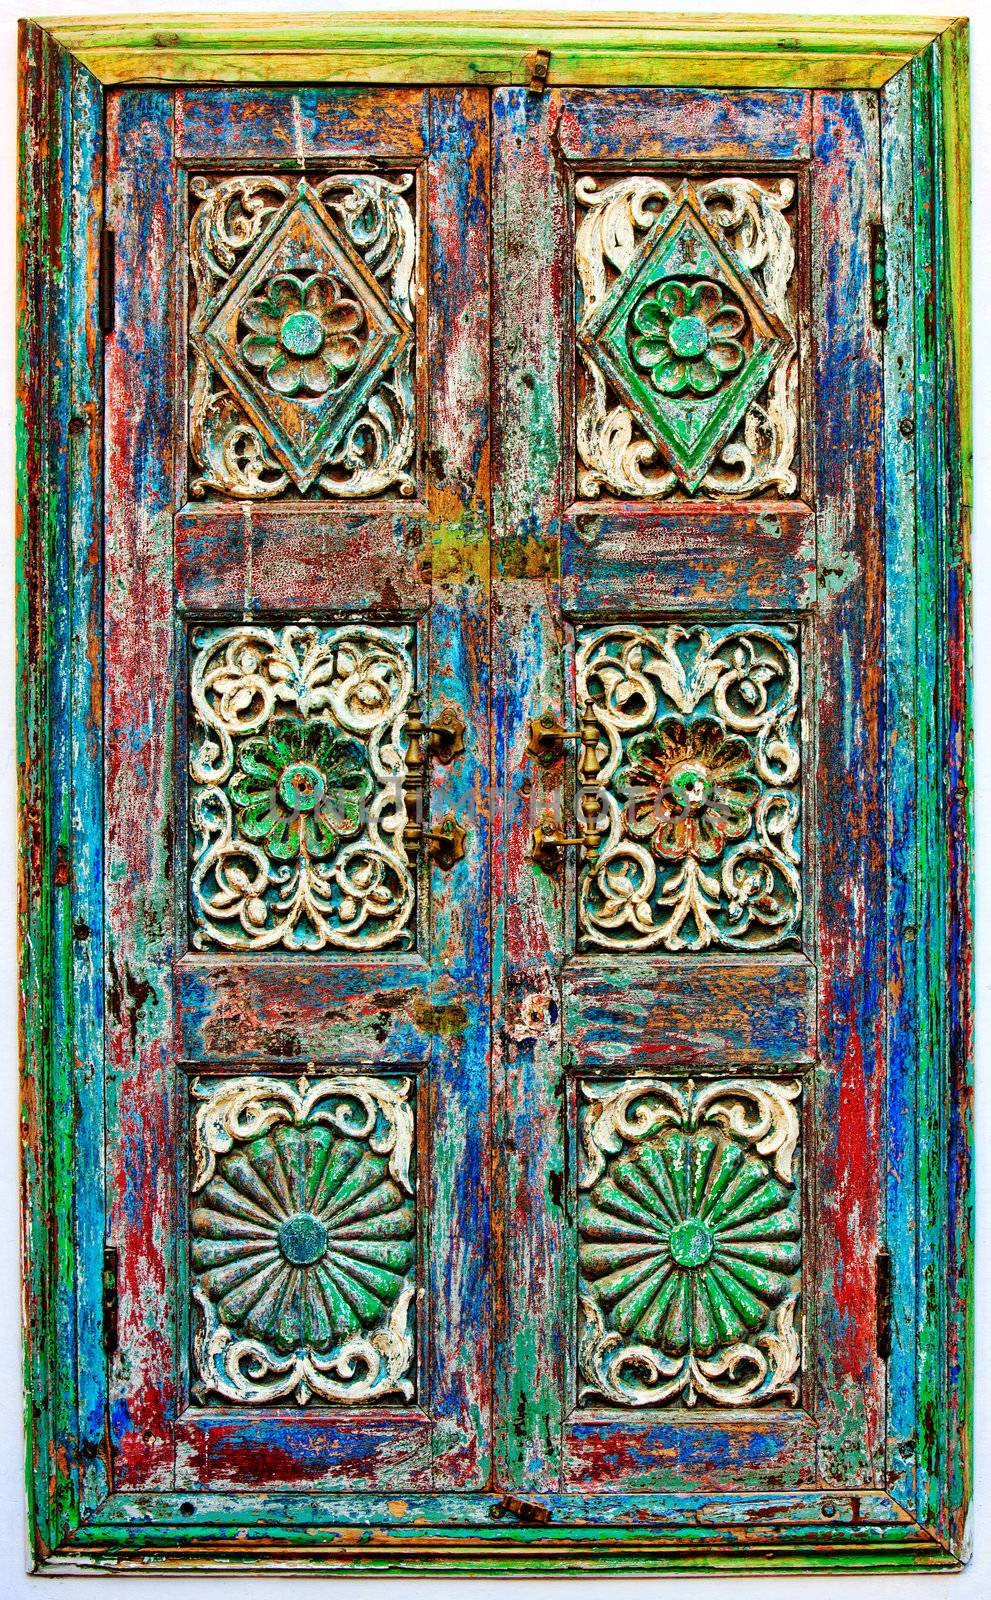 Old wooden shutters. by vladimir_sklyarov